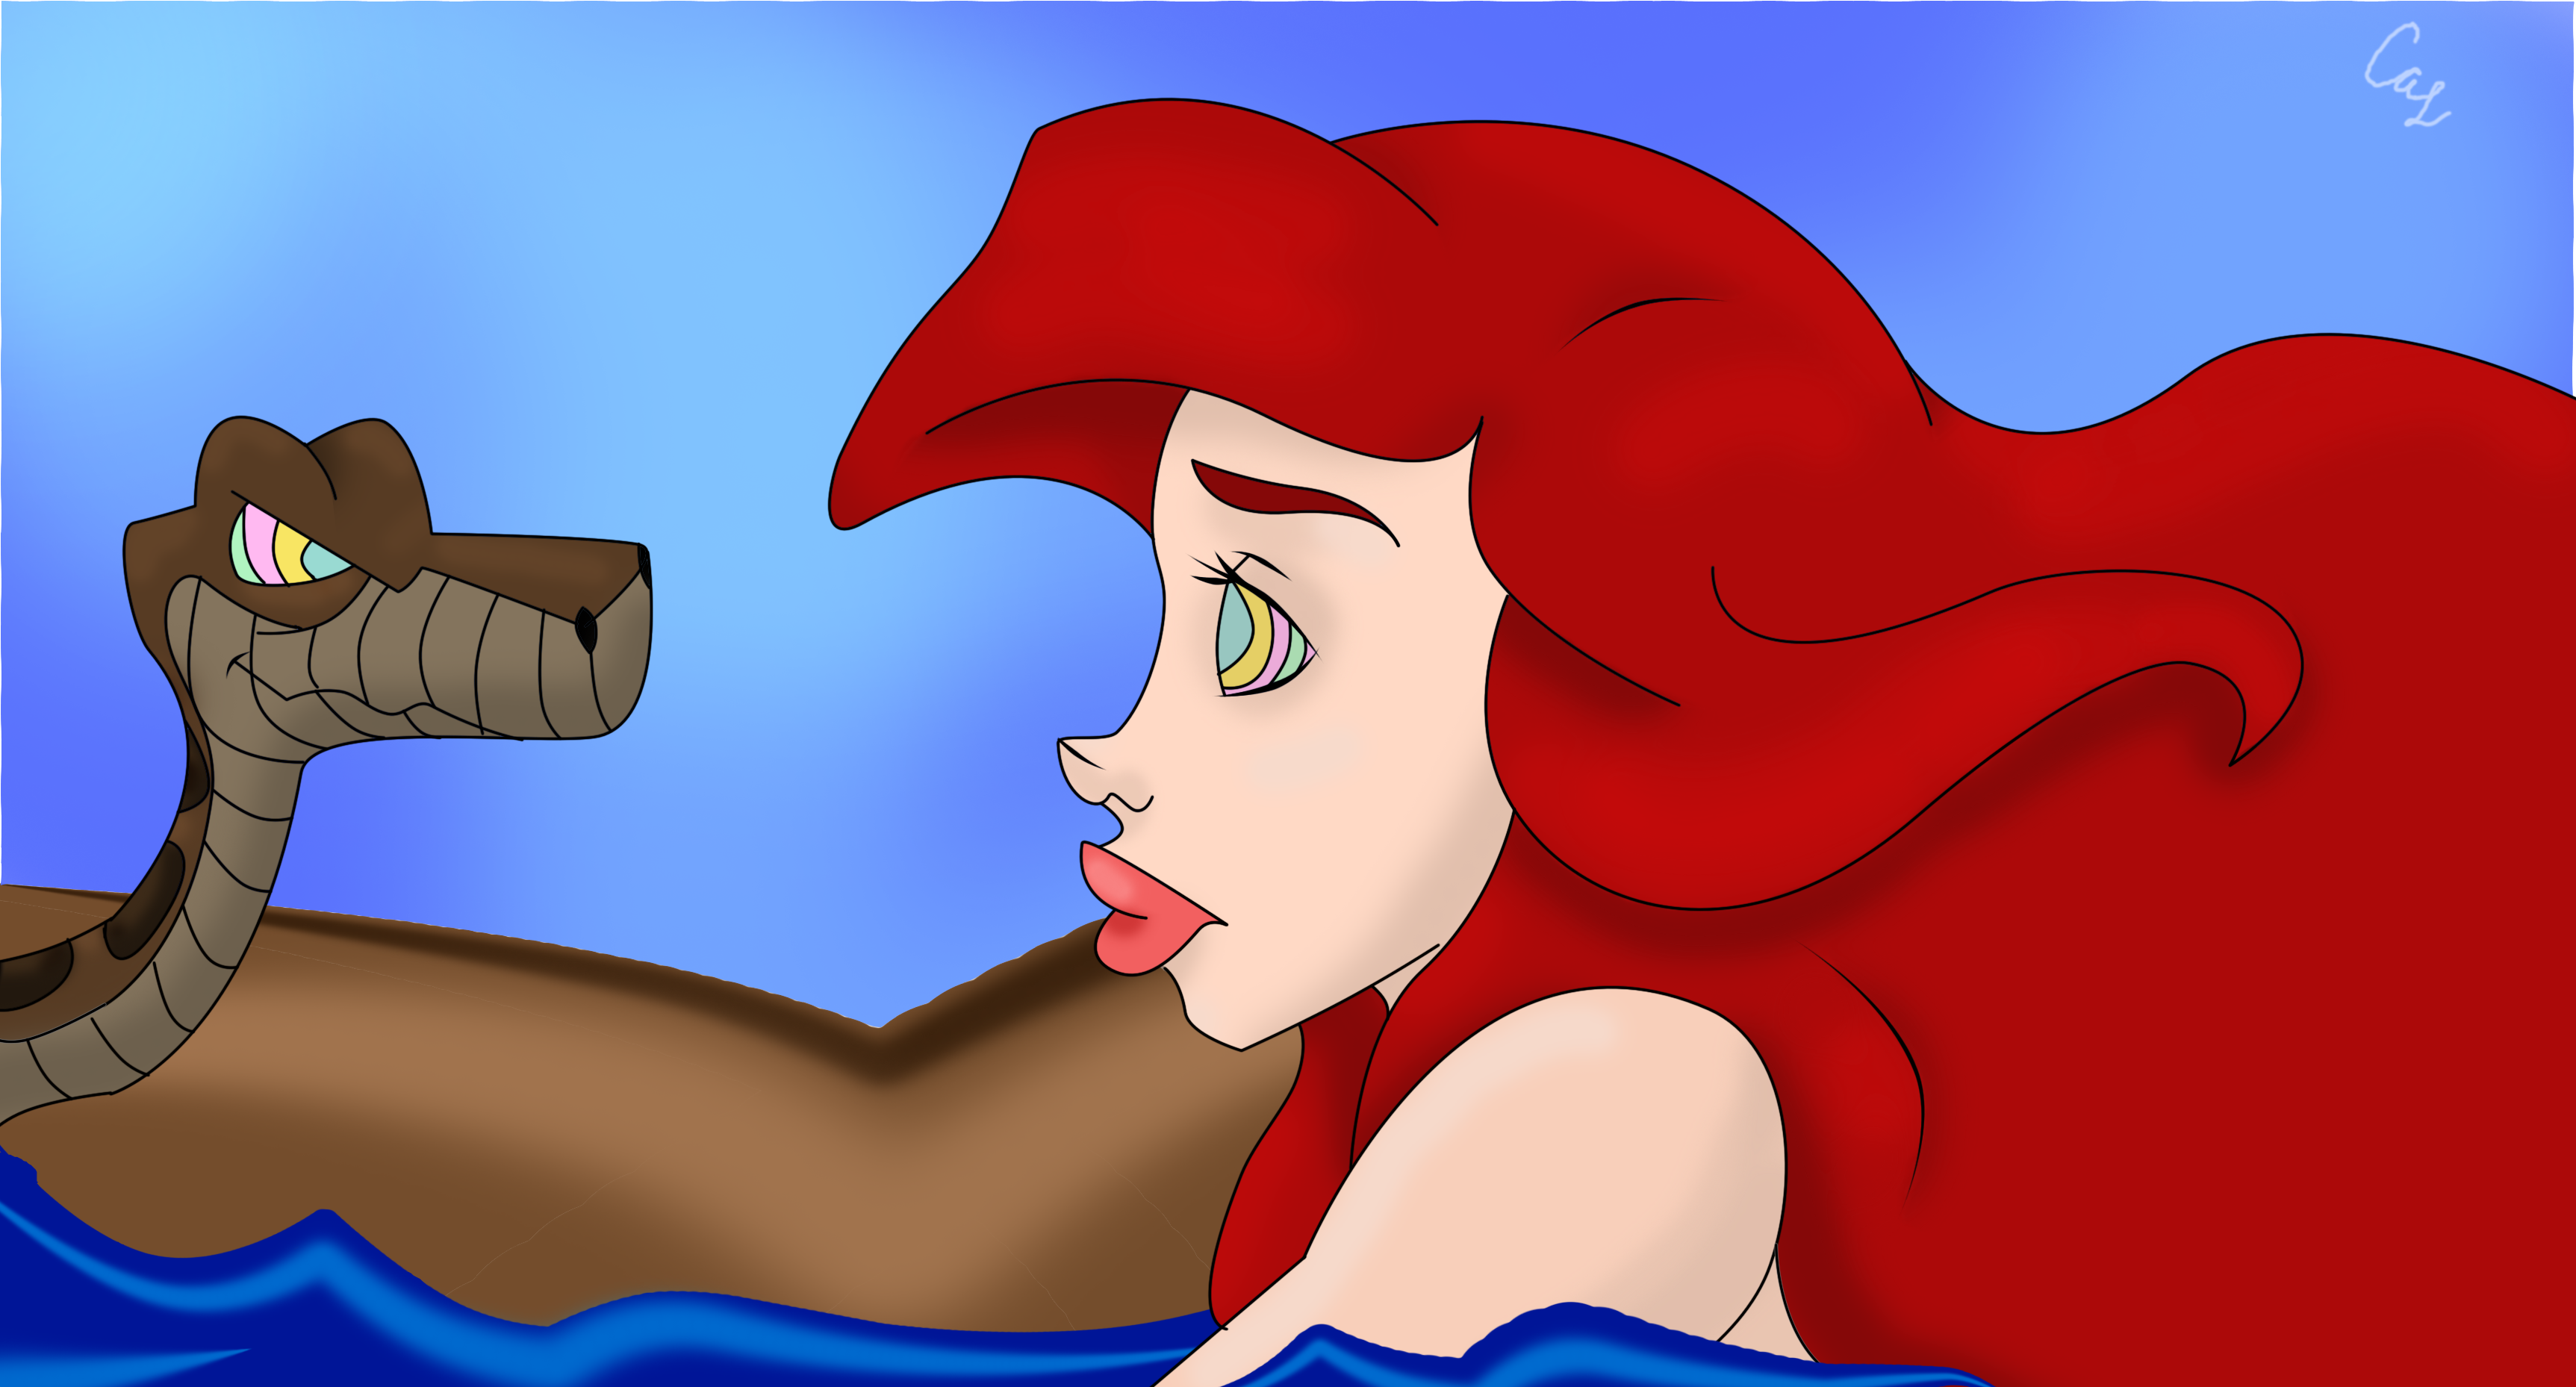 Kaa and Ariel by msdefectivetoaster on DeviantArt.